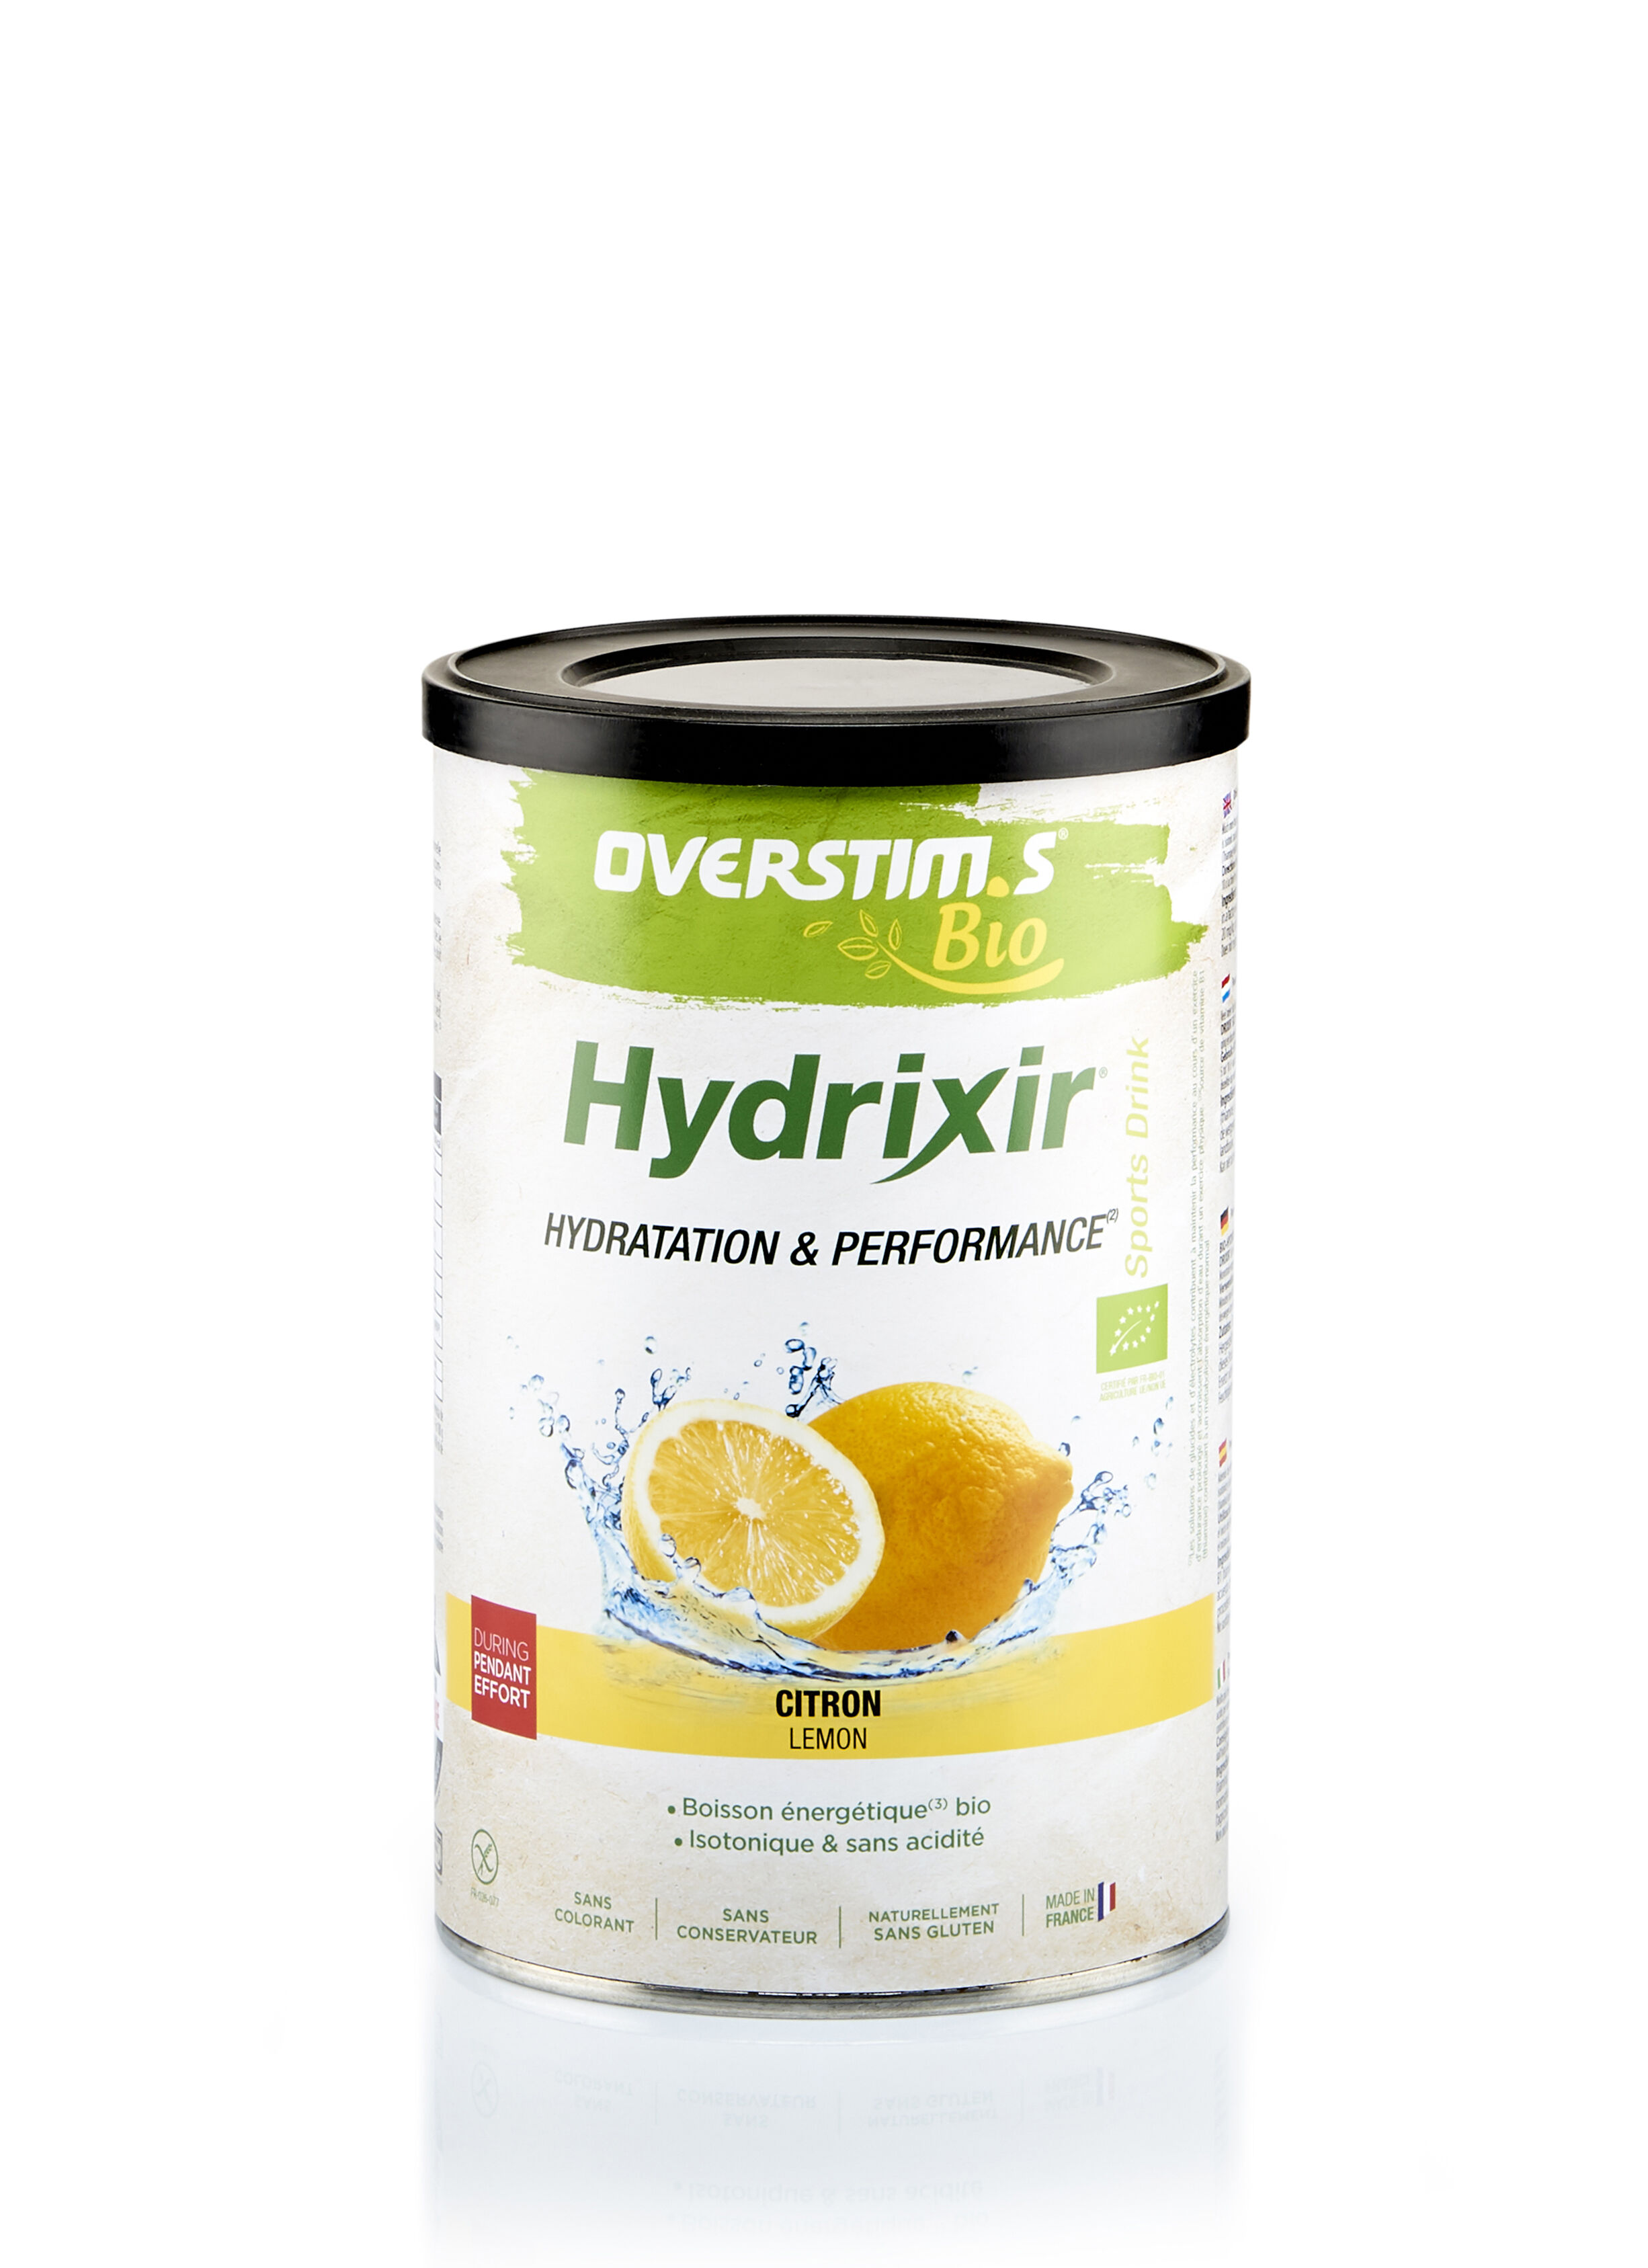 Overstim.s Hydrixir Antioxydant Bio - Energiajuoma